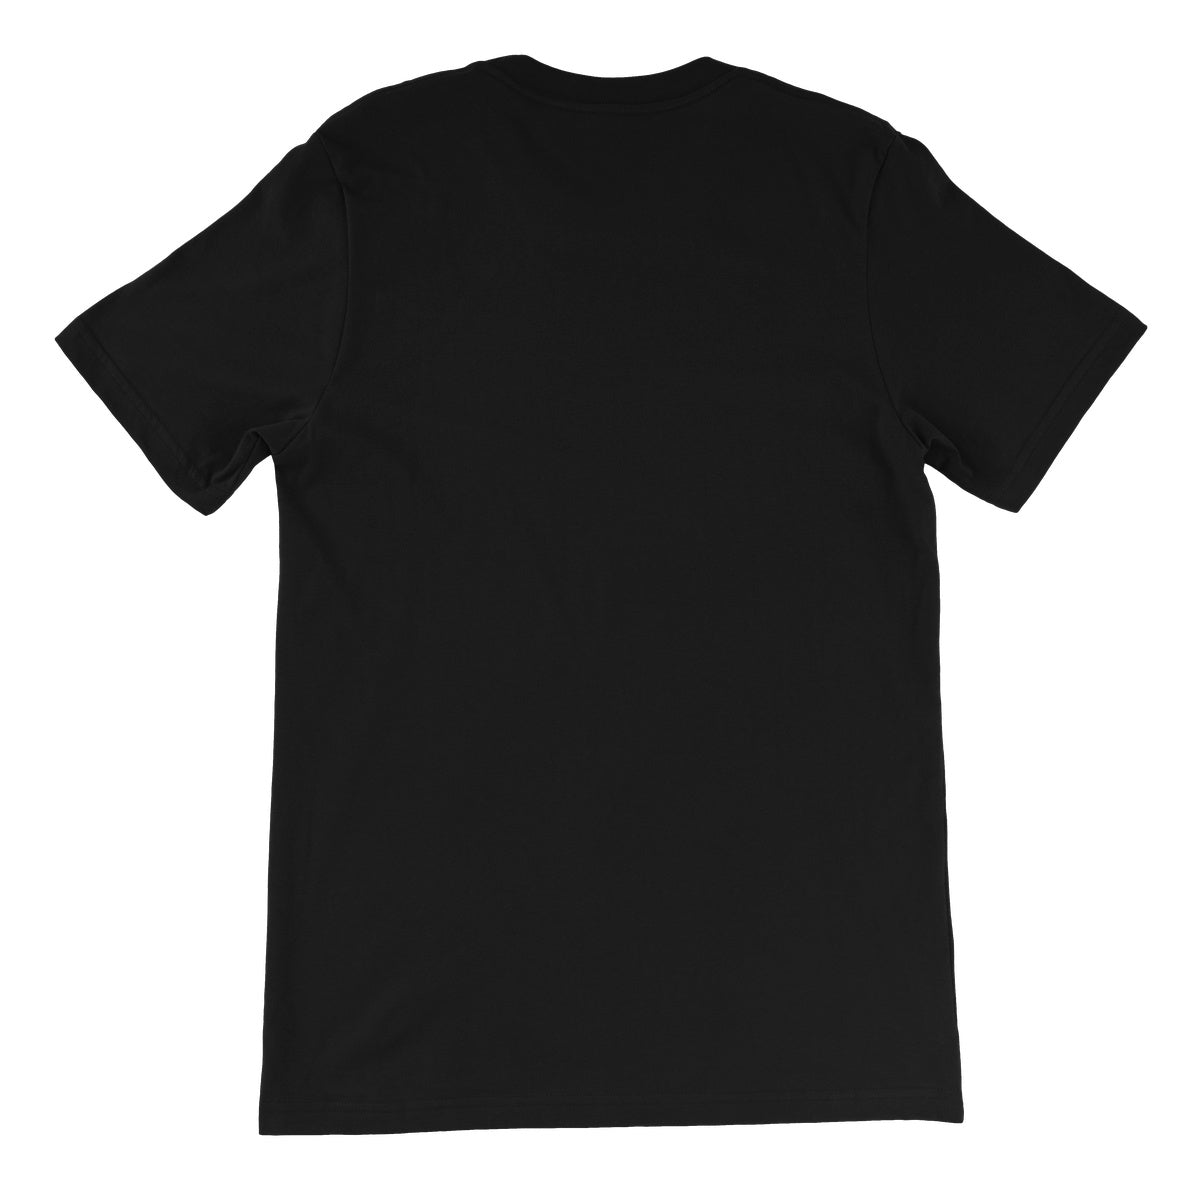 Complex Circle, 2 Slits Unisex Short Sleeve T-Shirt